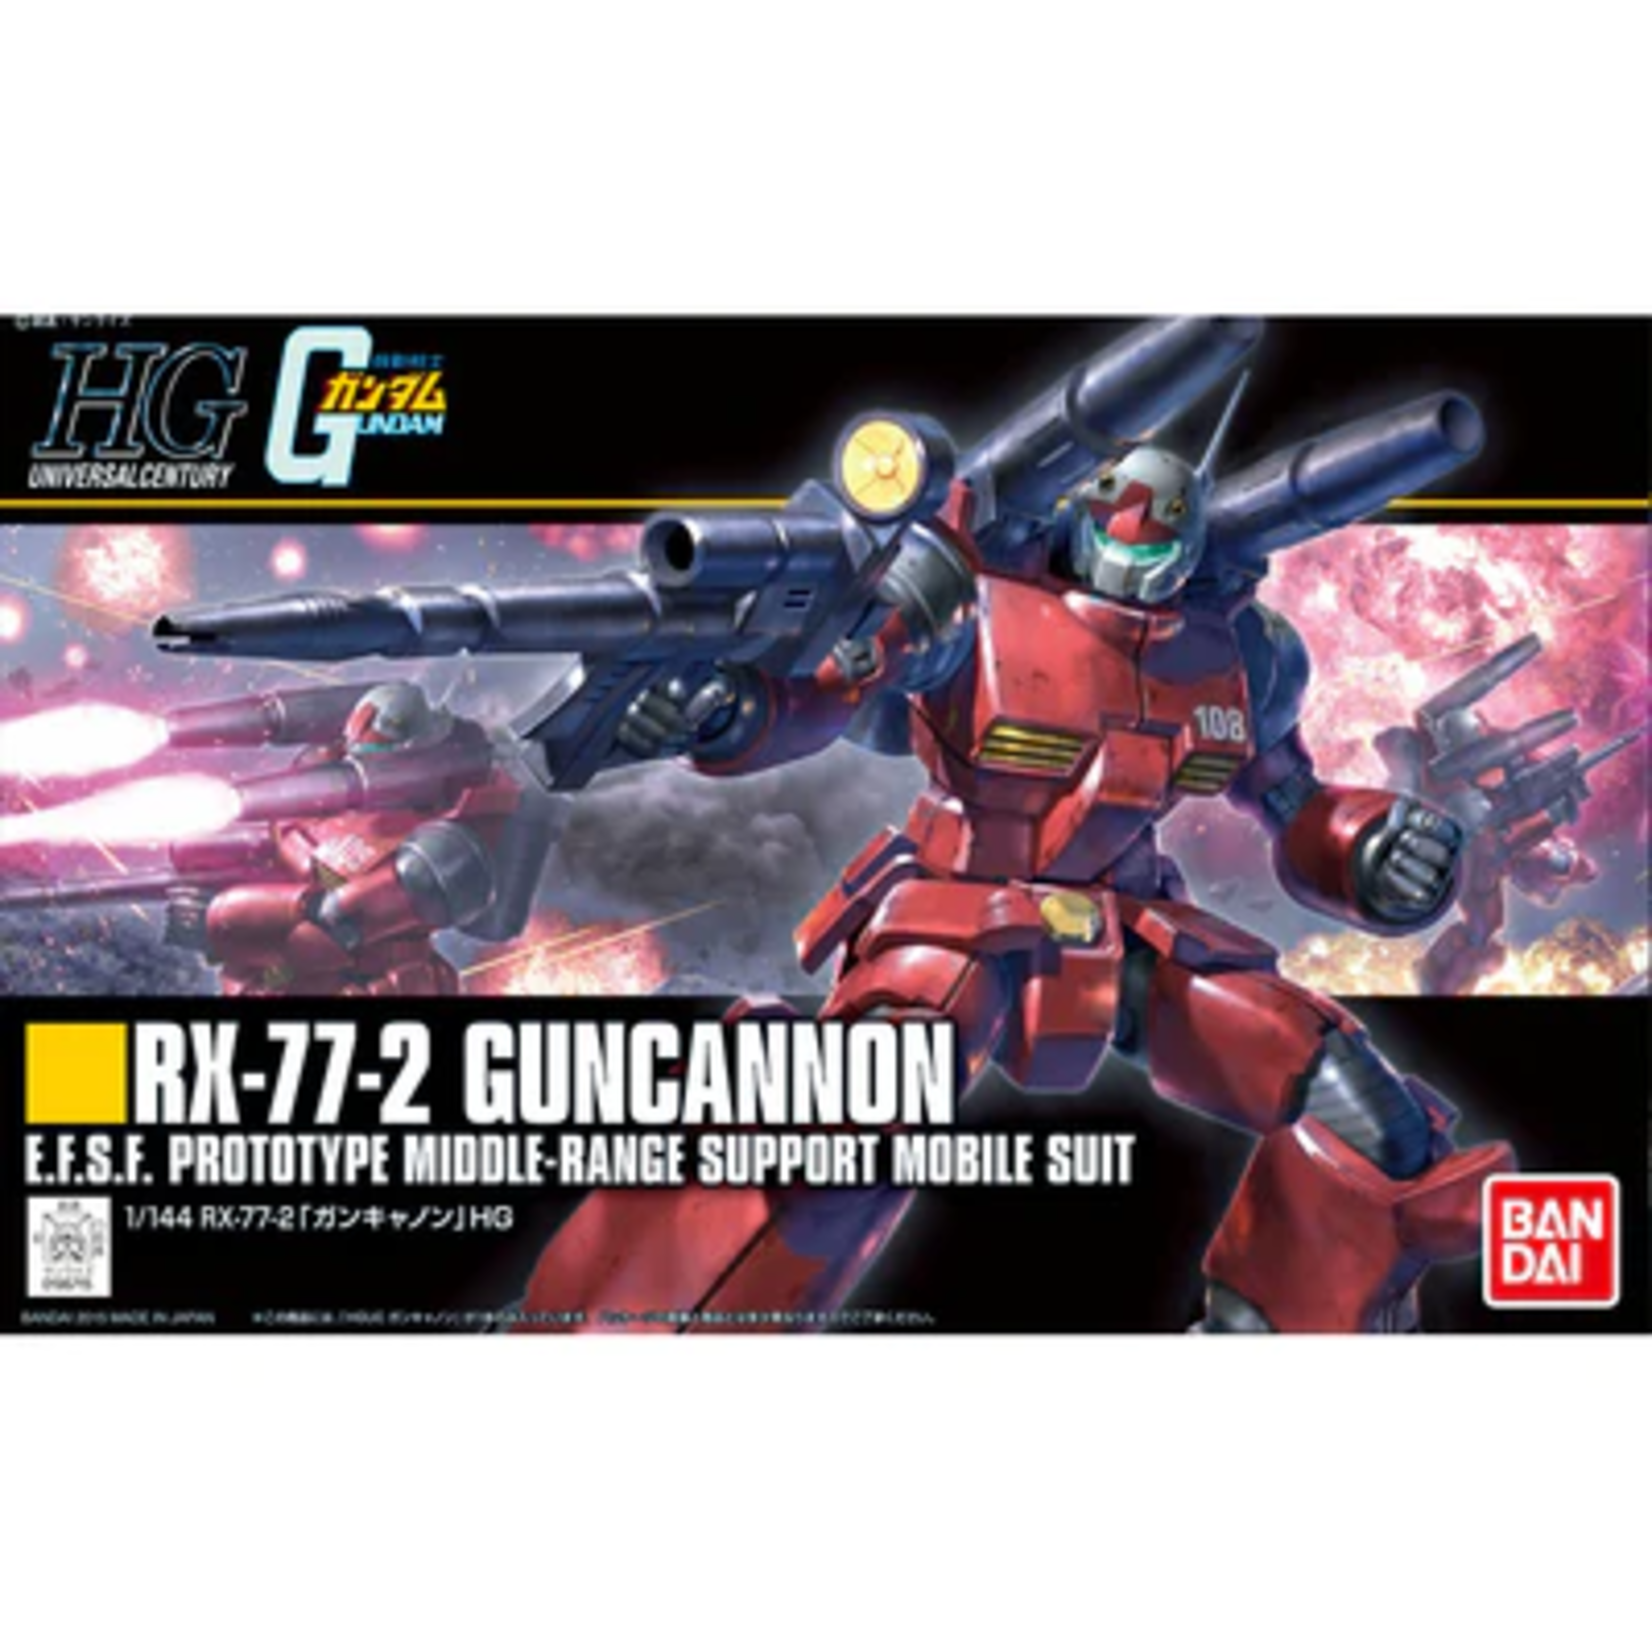 Bandai Gundam 190 Rx-77-2 Guncannon Mobile Suit Gundam